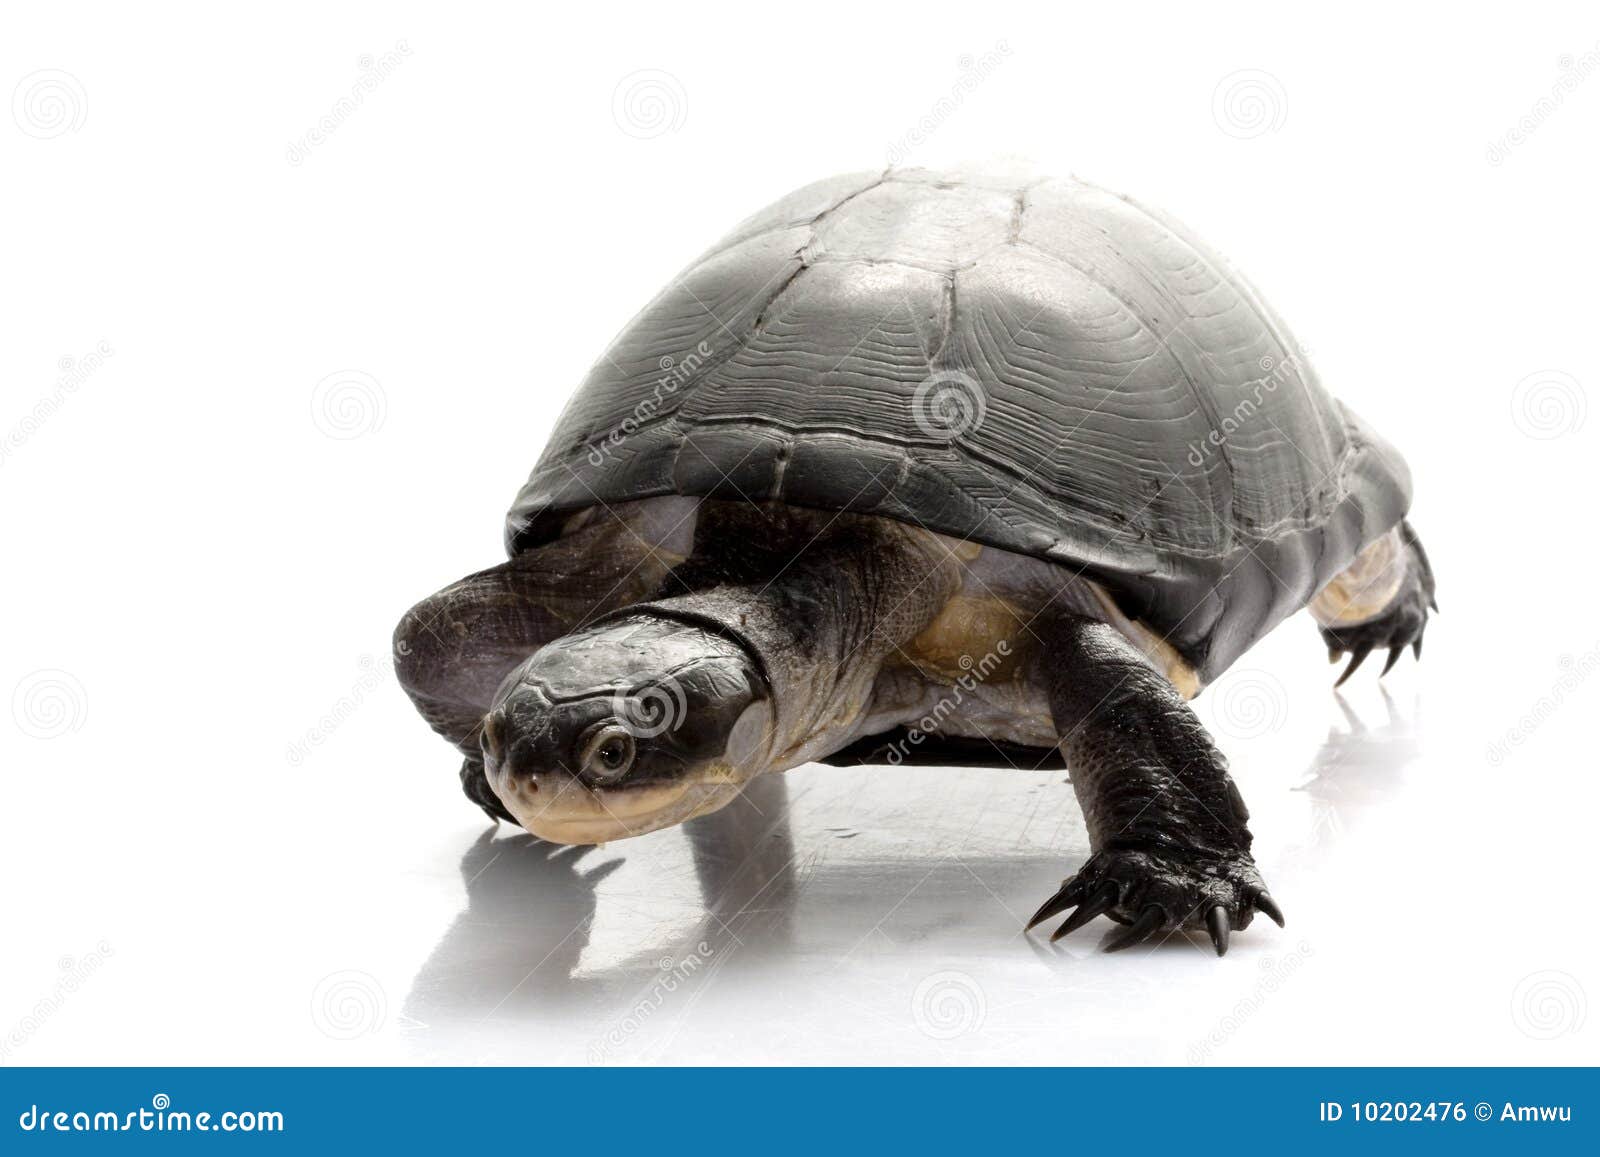 East African Black Mud Turtle Royalty Free Stock Image - Image: 10202476